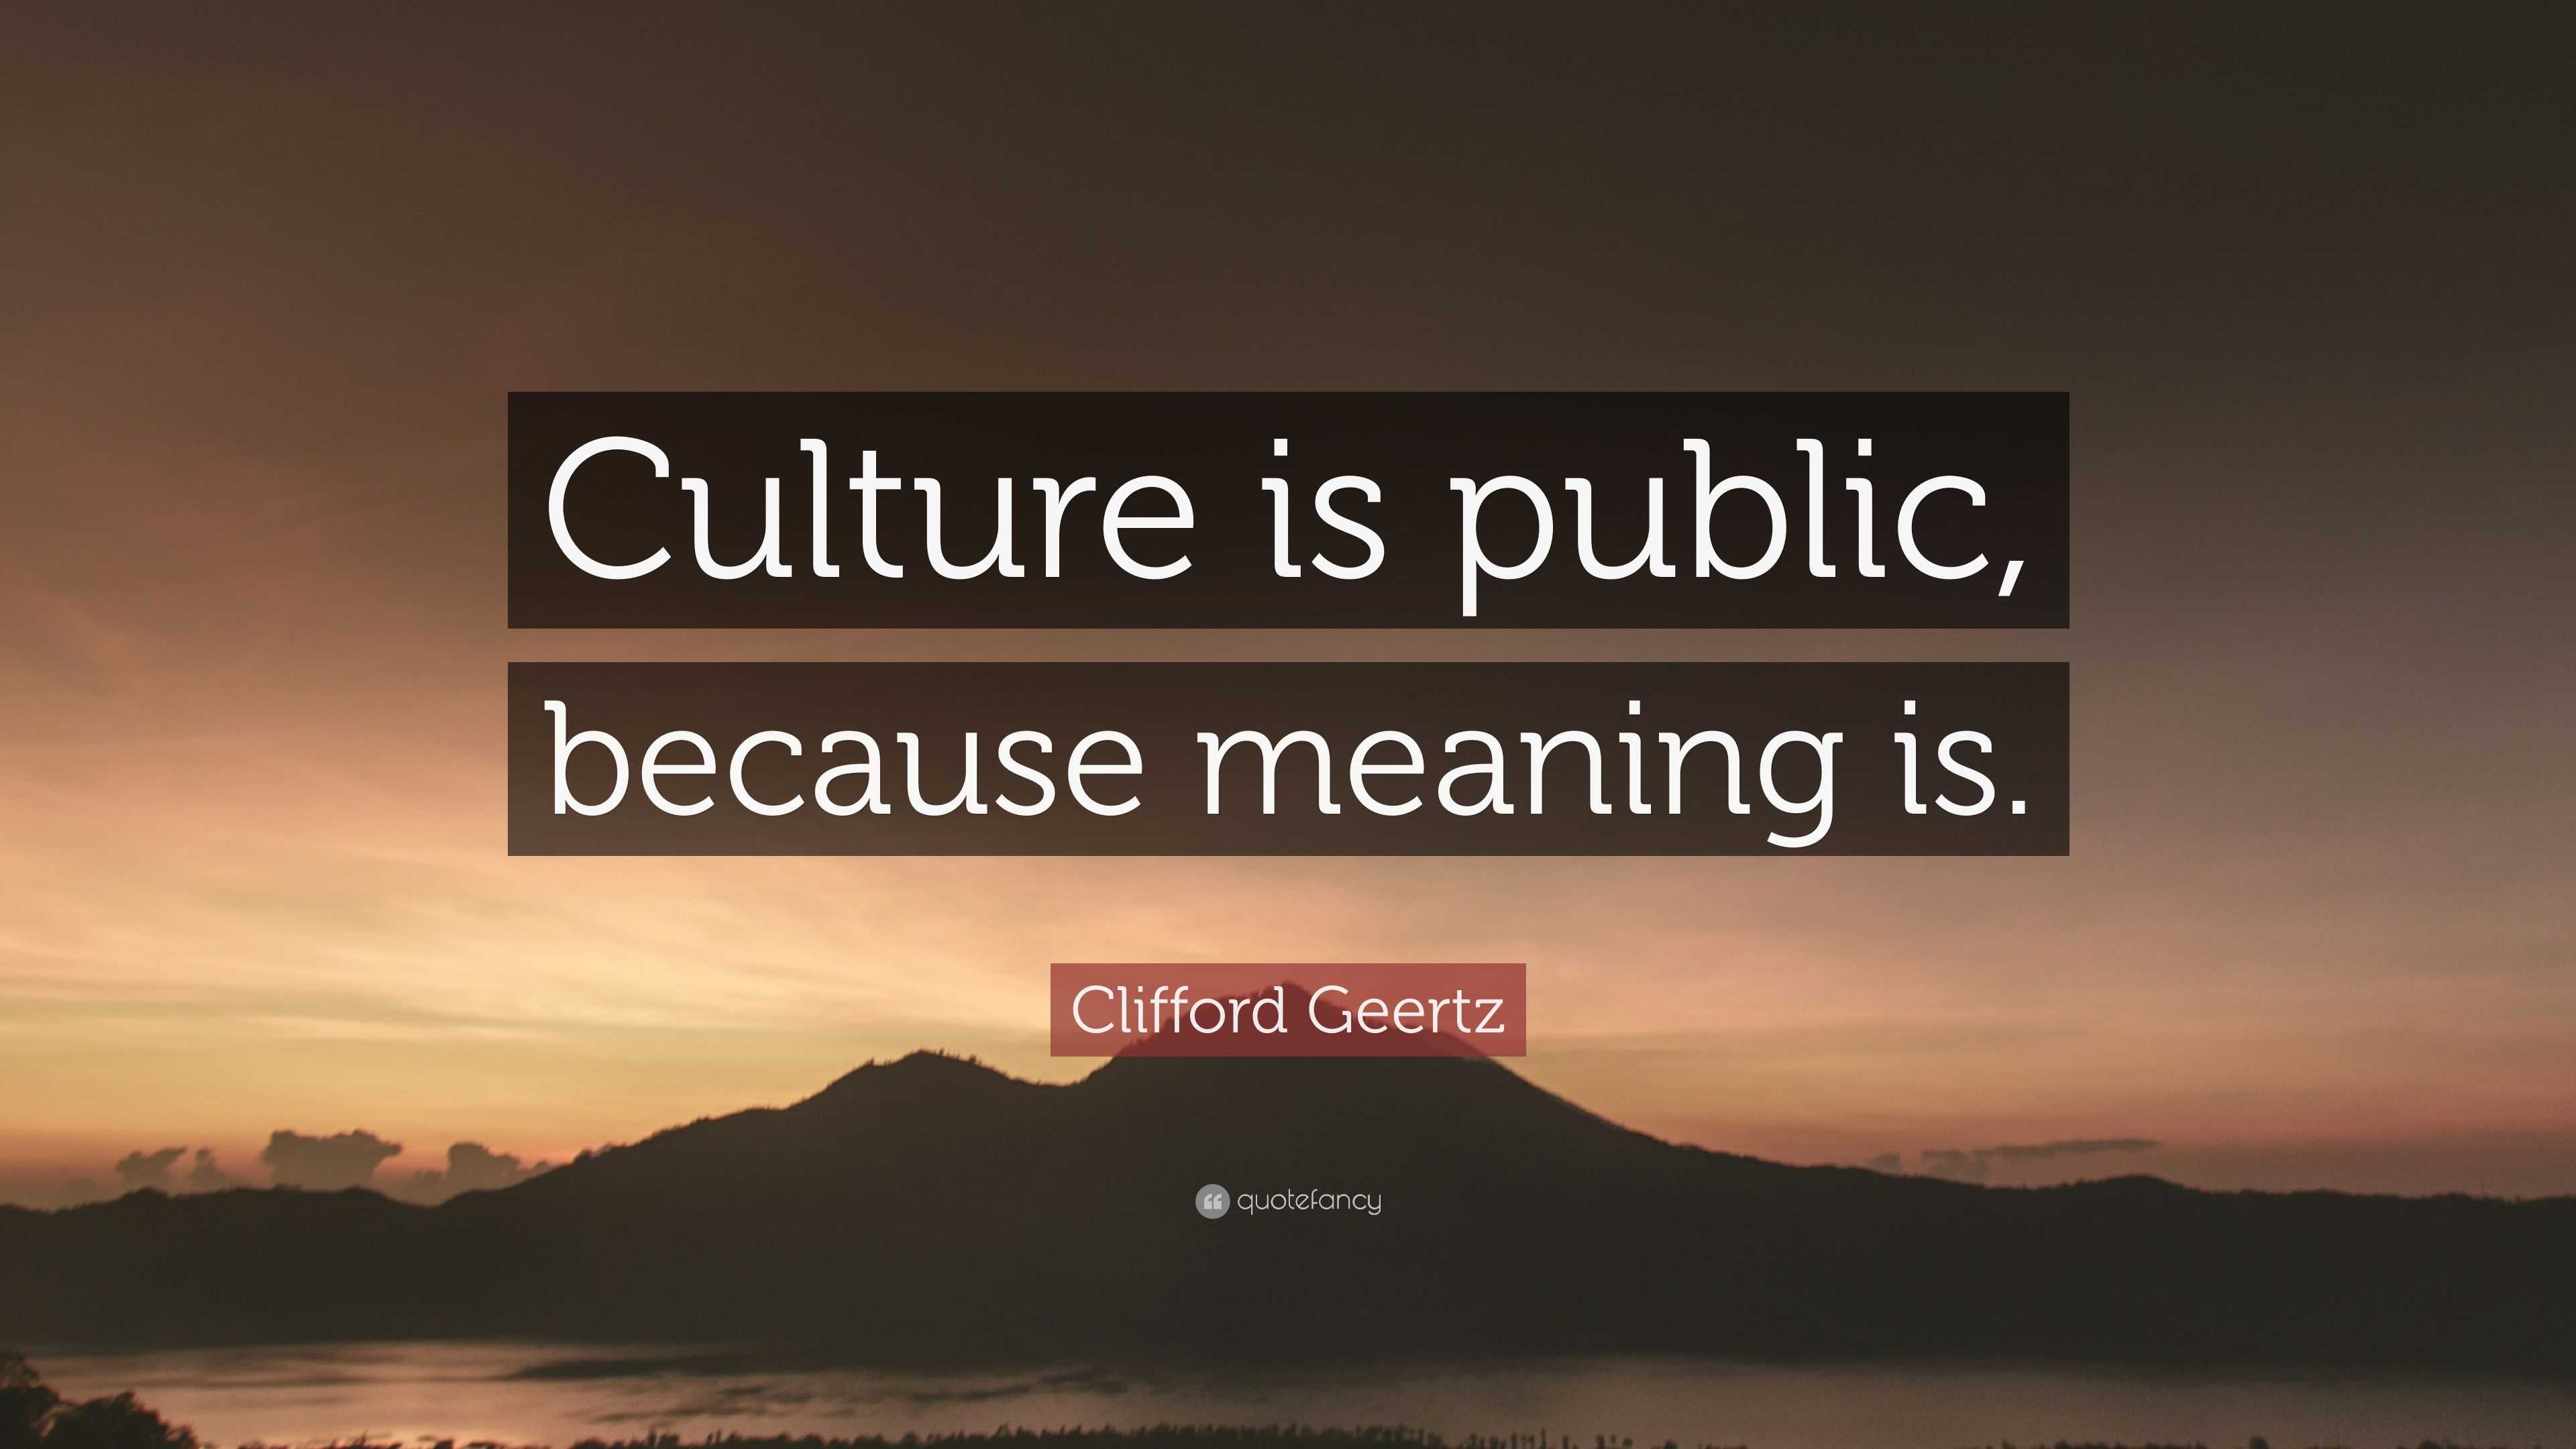 the interpretation of cultures by clifford geertz summary